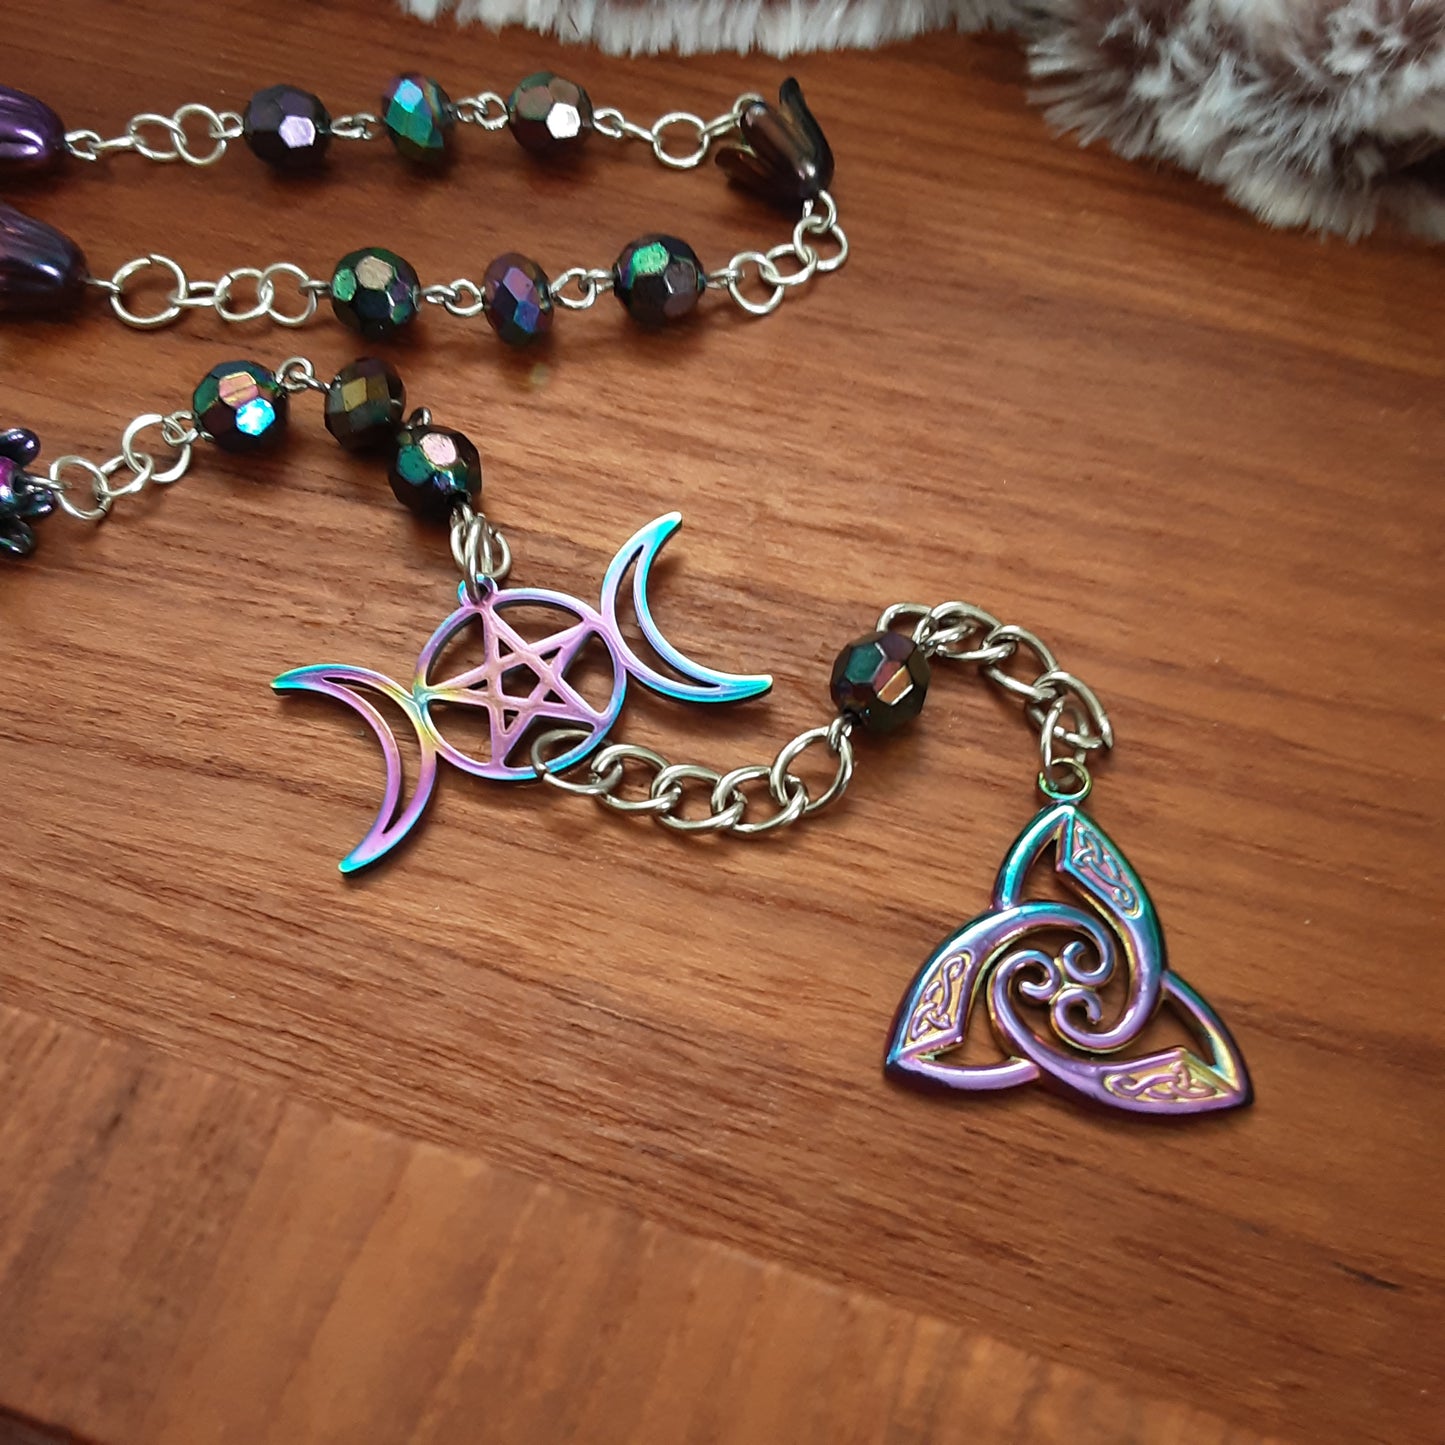 Triple Moon Goddess prayer beads with dark rainbow flowers